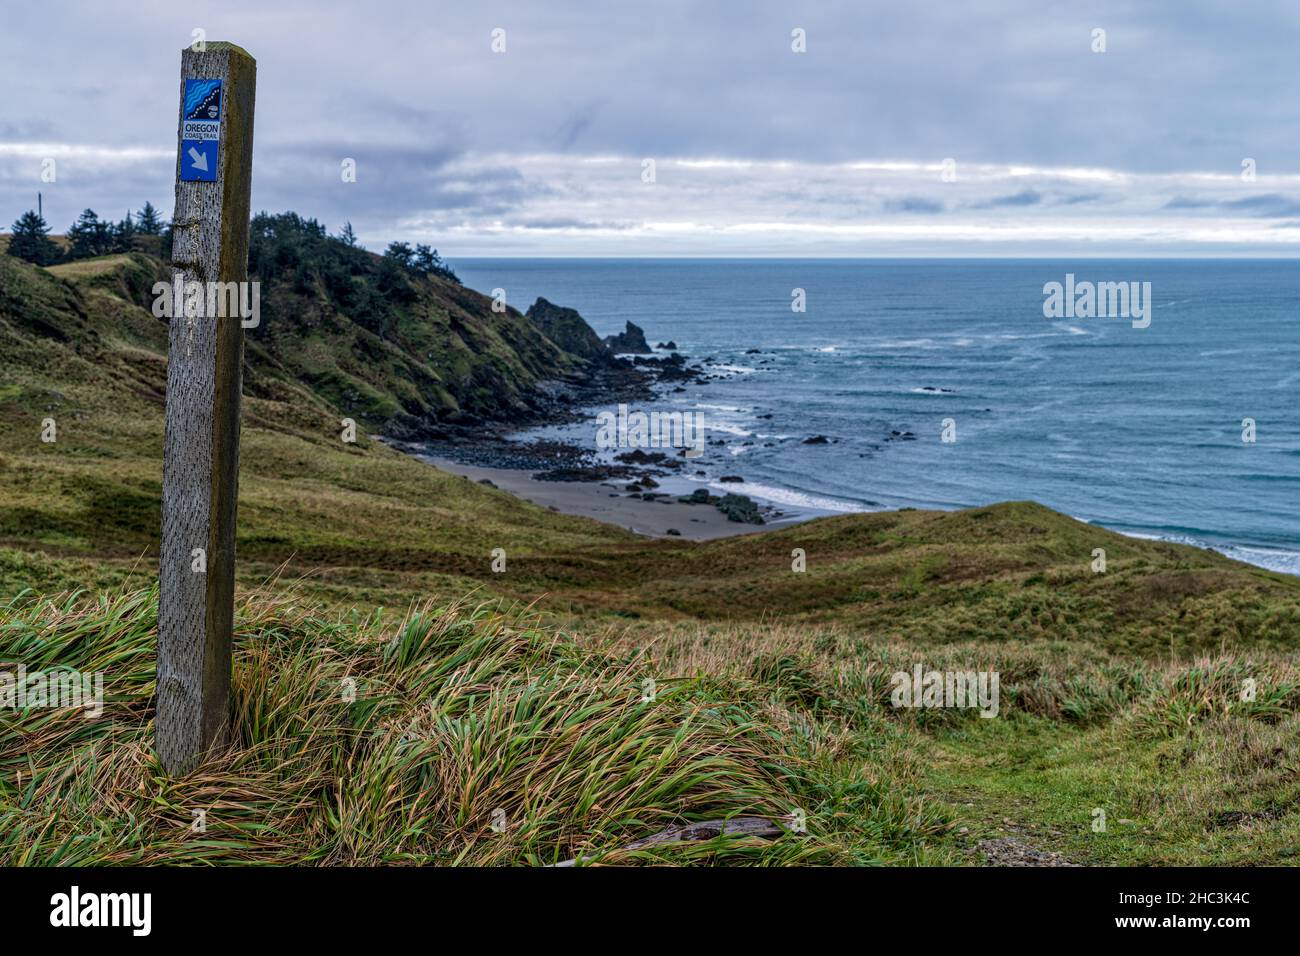 A wood post marks the Oregon Coast Trail at Cape Blanco State Park in Oregon, USA Stock Photo